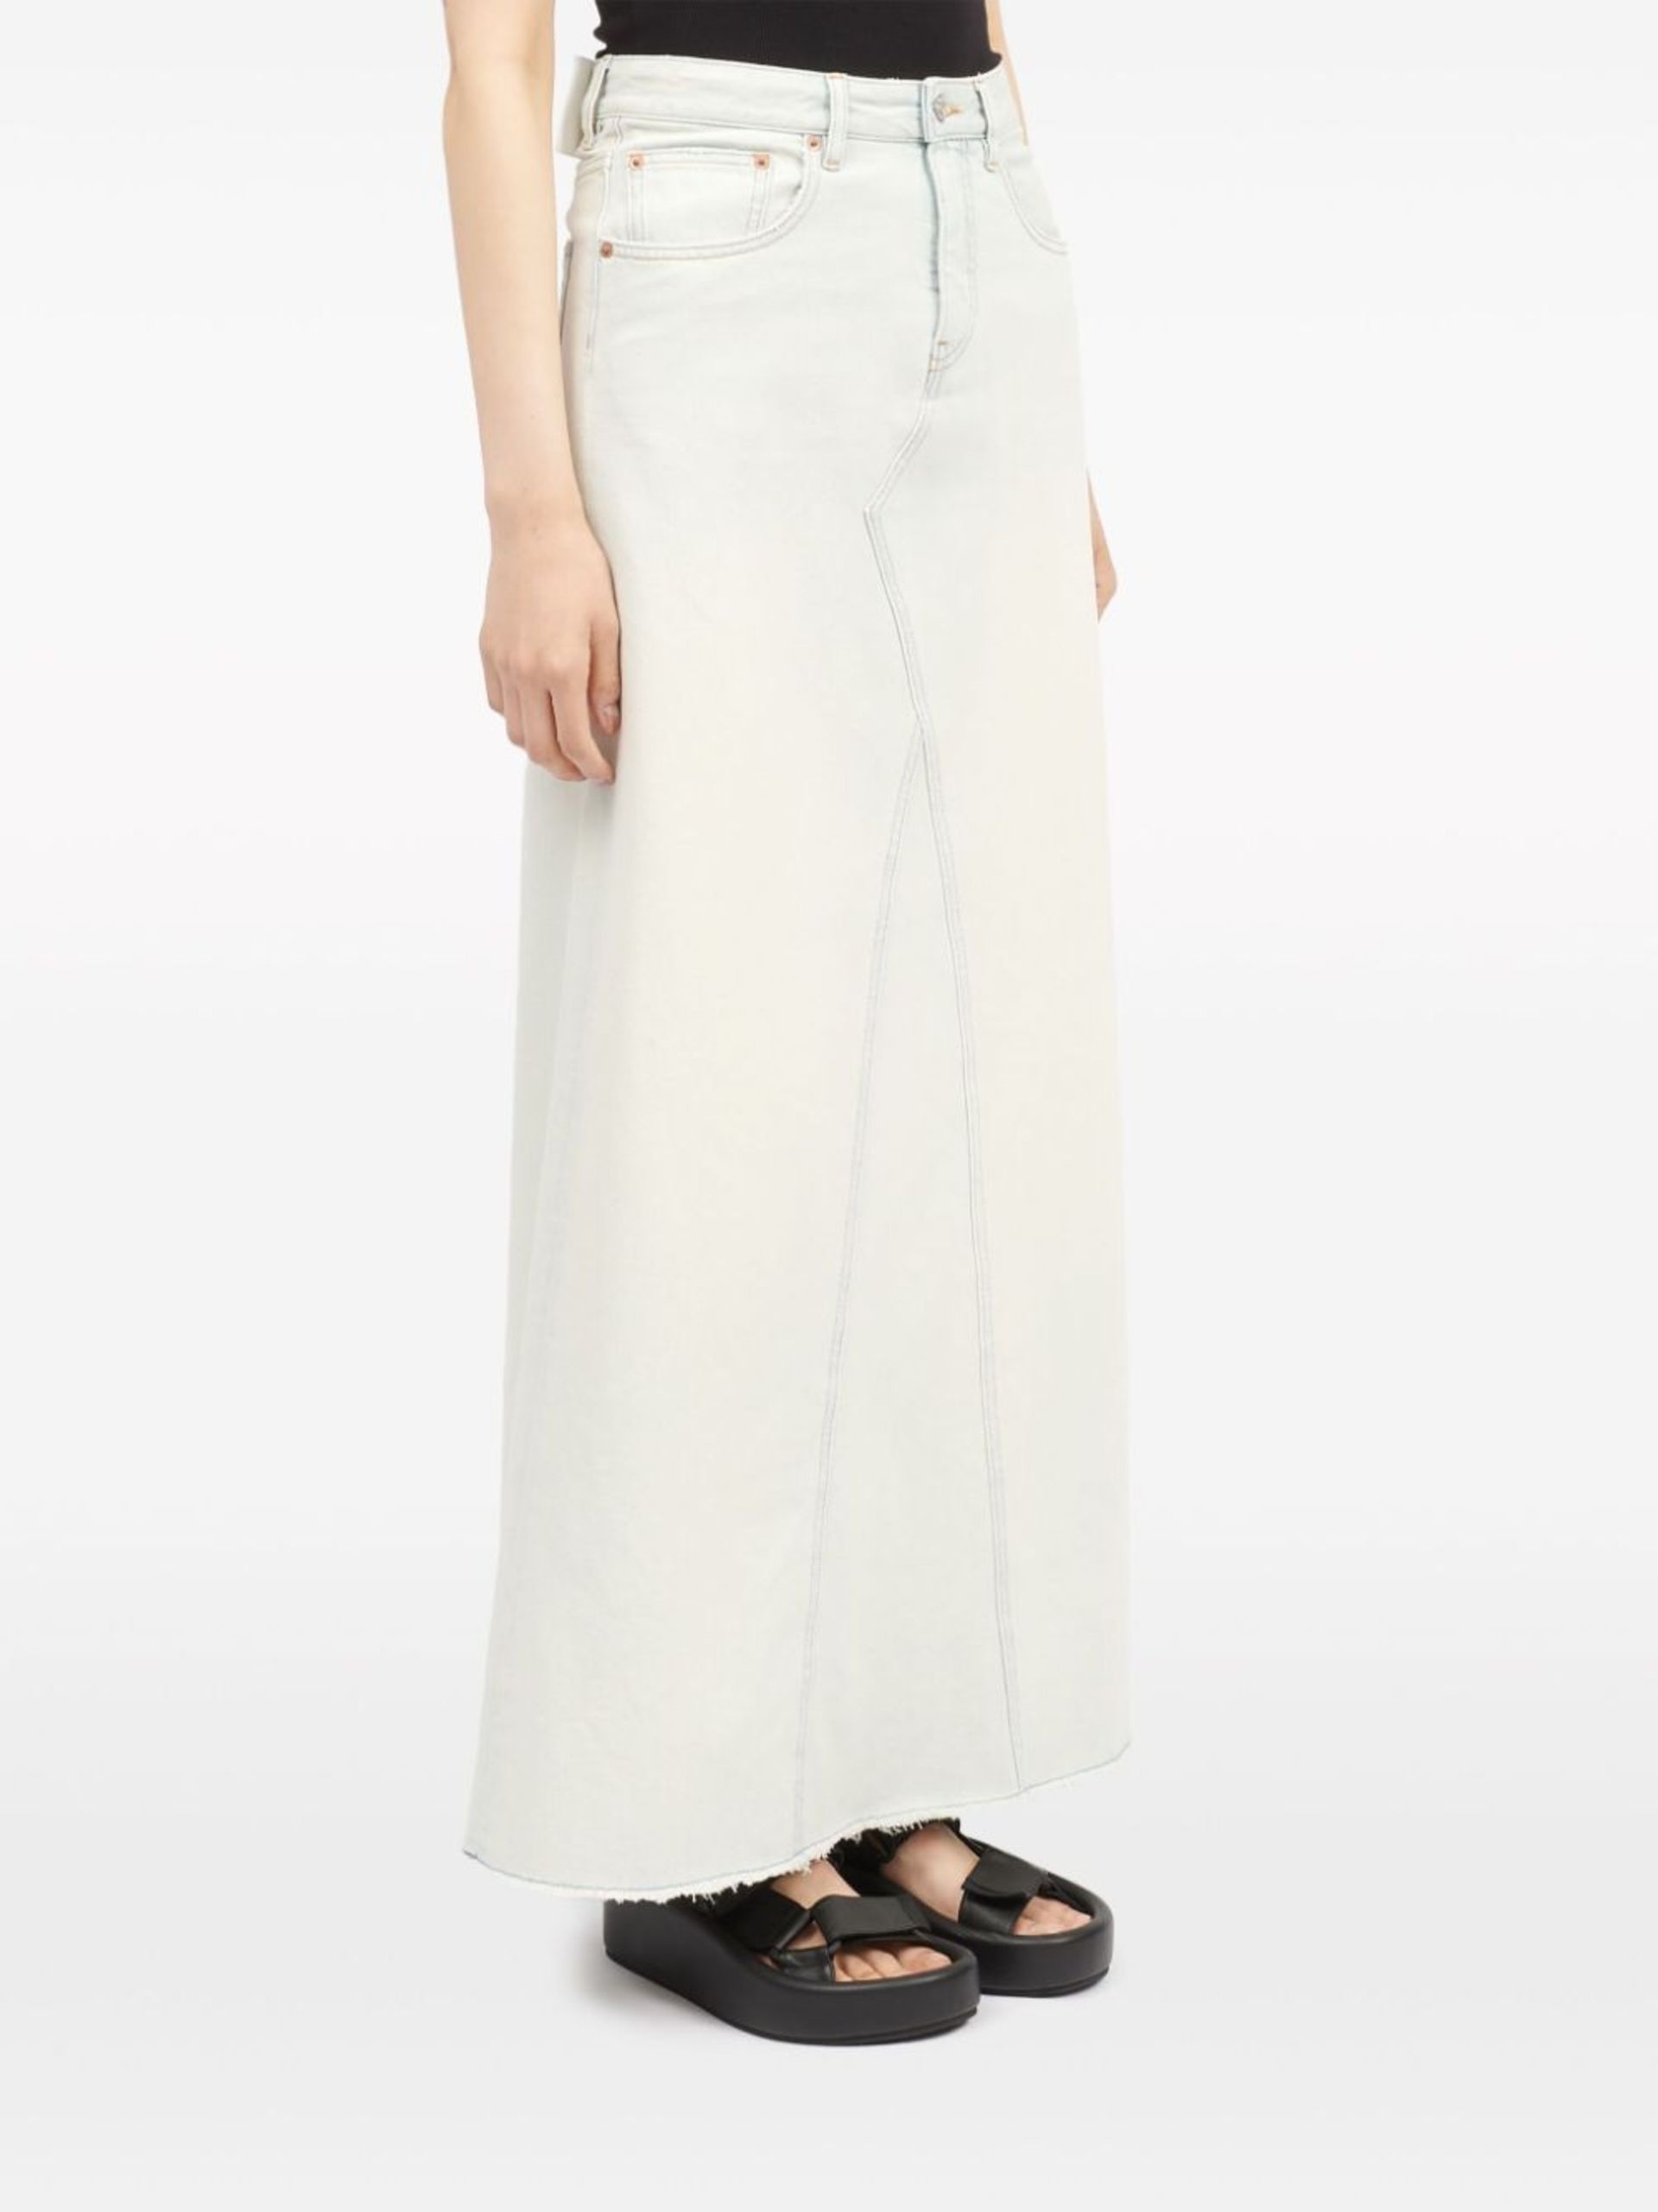 White A-Line Denim Maxi Skirt - 3